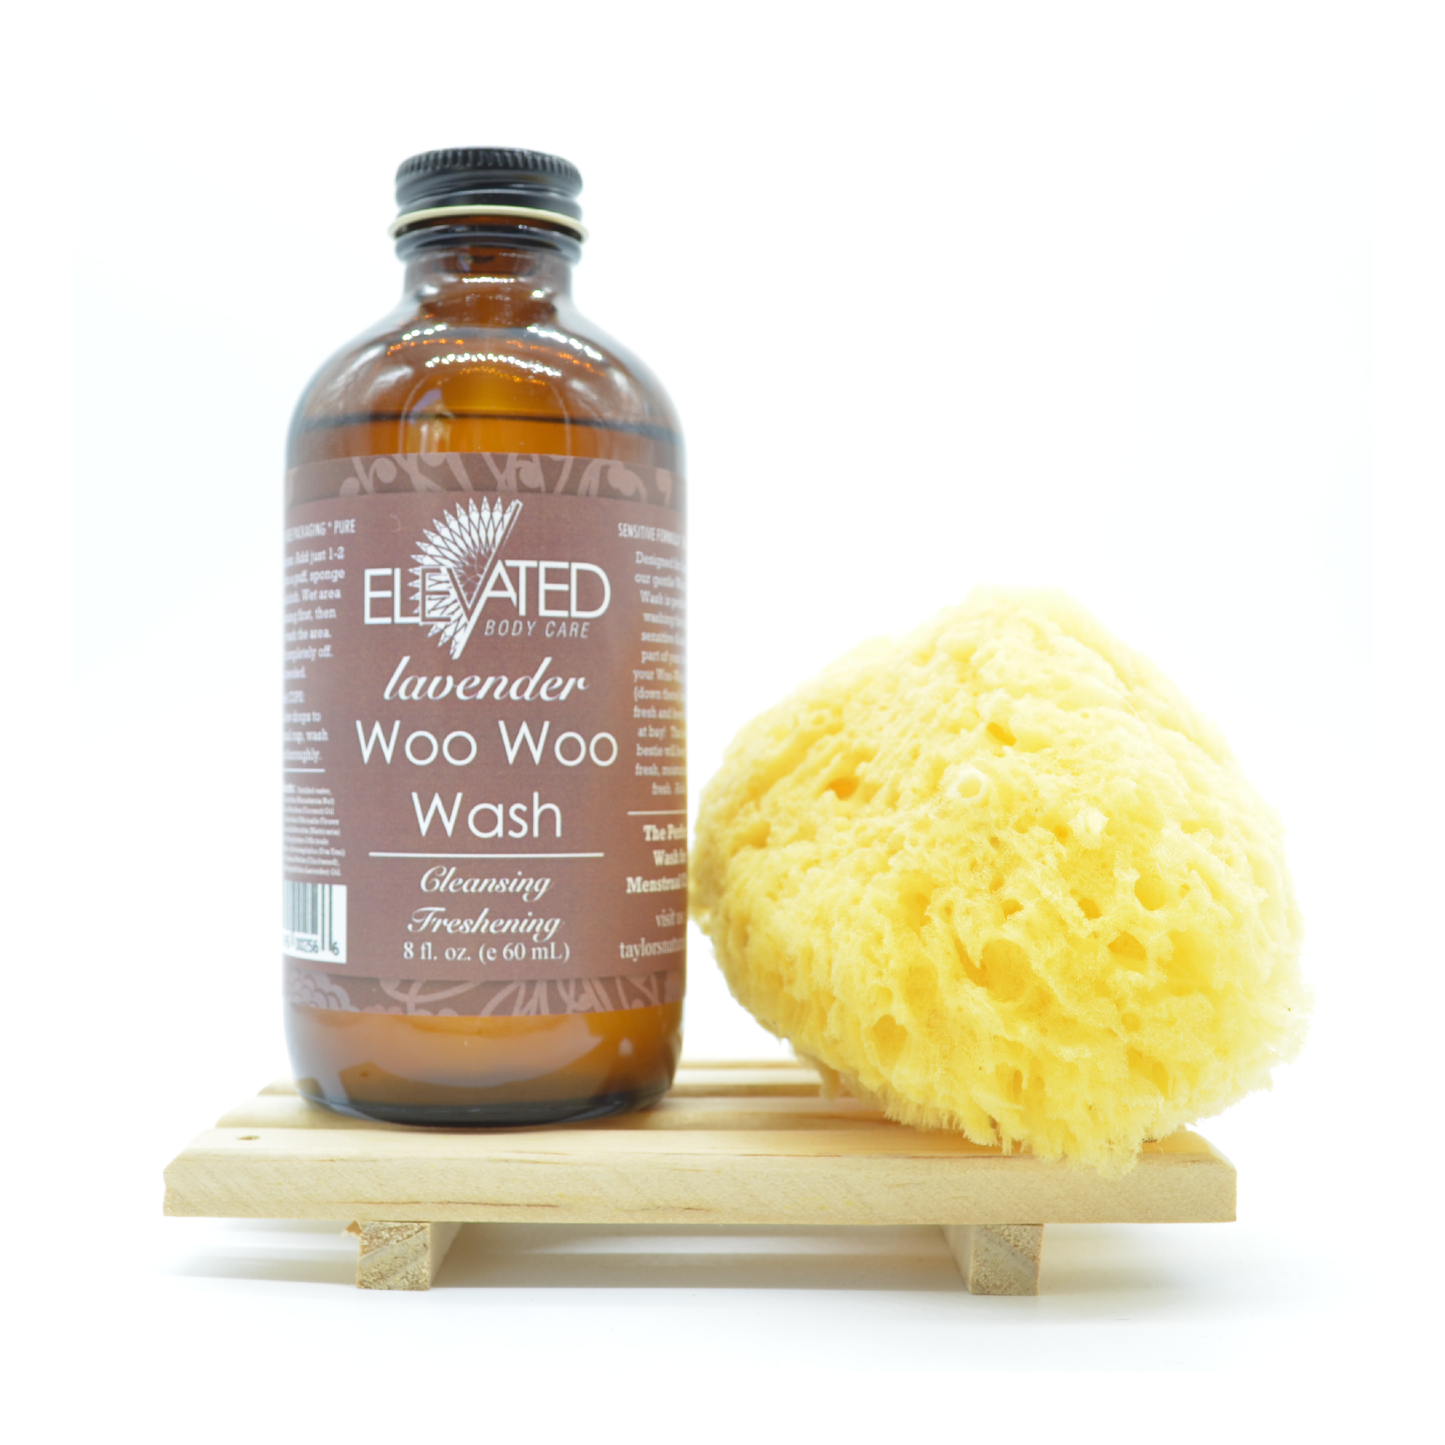 Elevated Body Care - Woo Woo Wash with optional Sponge